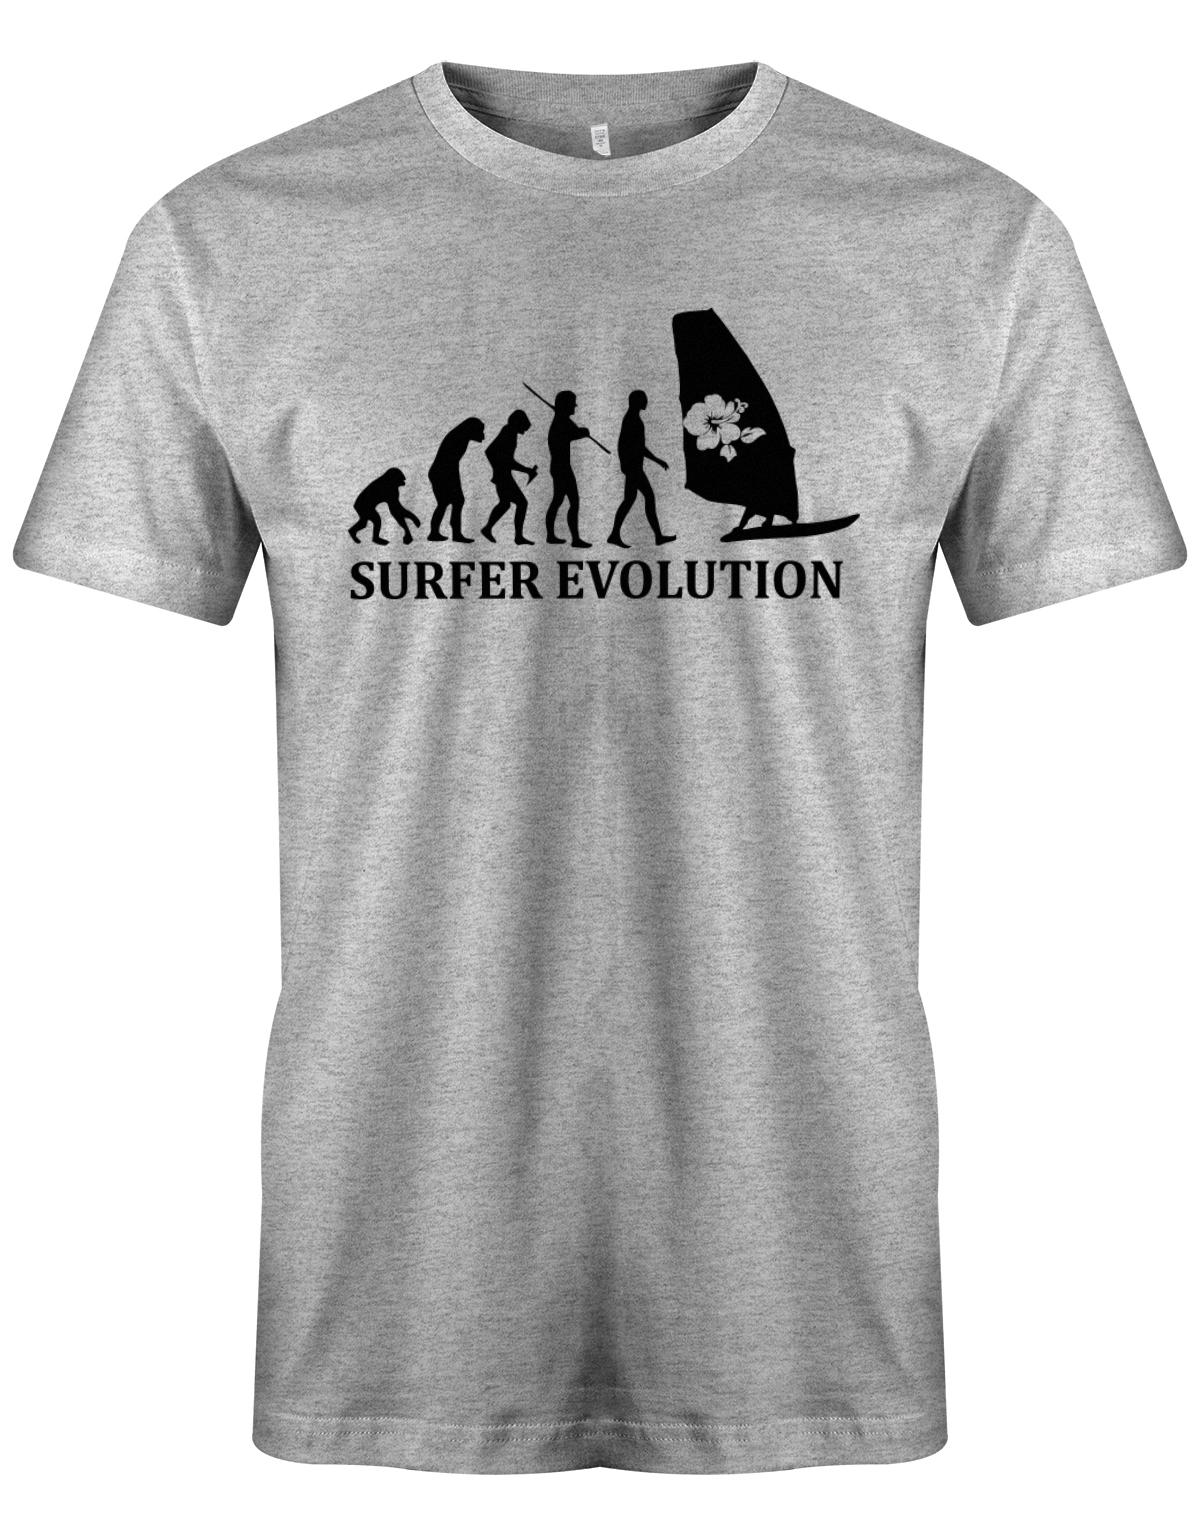 Surfer-Evolution-Surf-Herren-Shirt-Grau